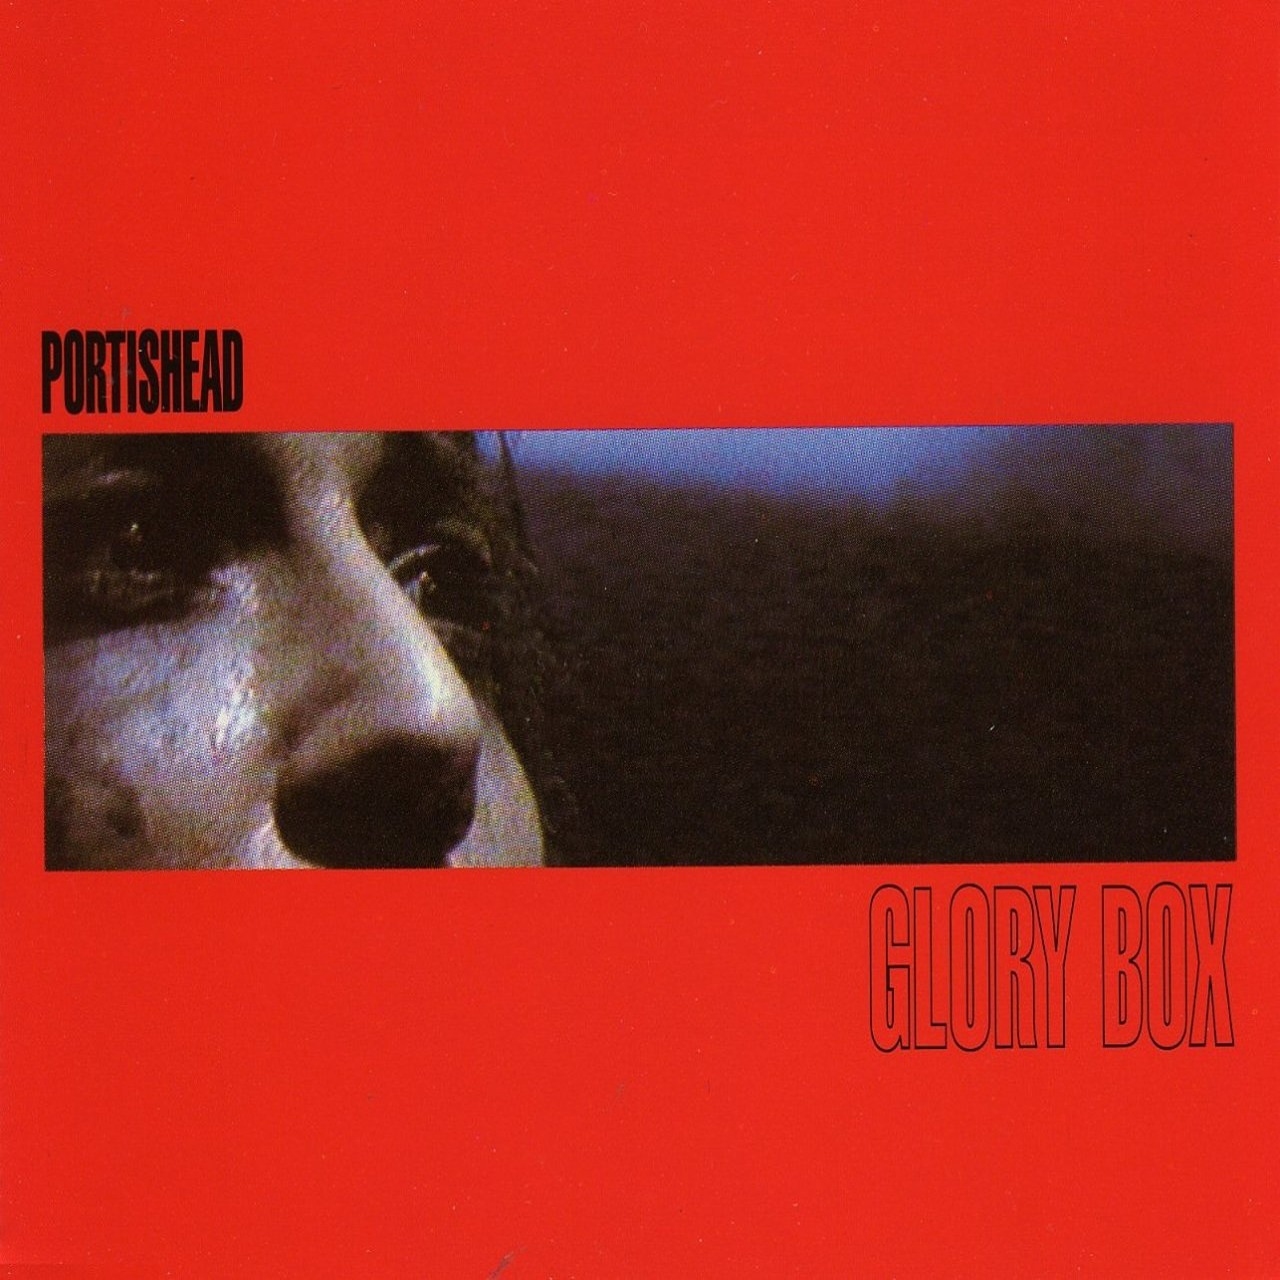 Portishead — Glory Box cover artwork